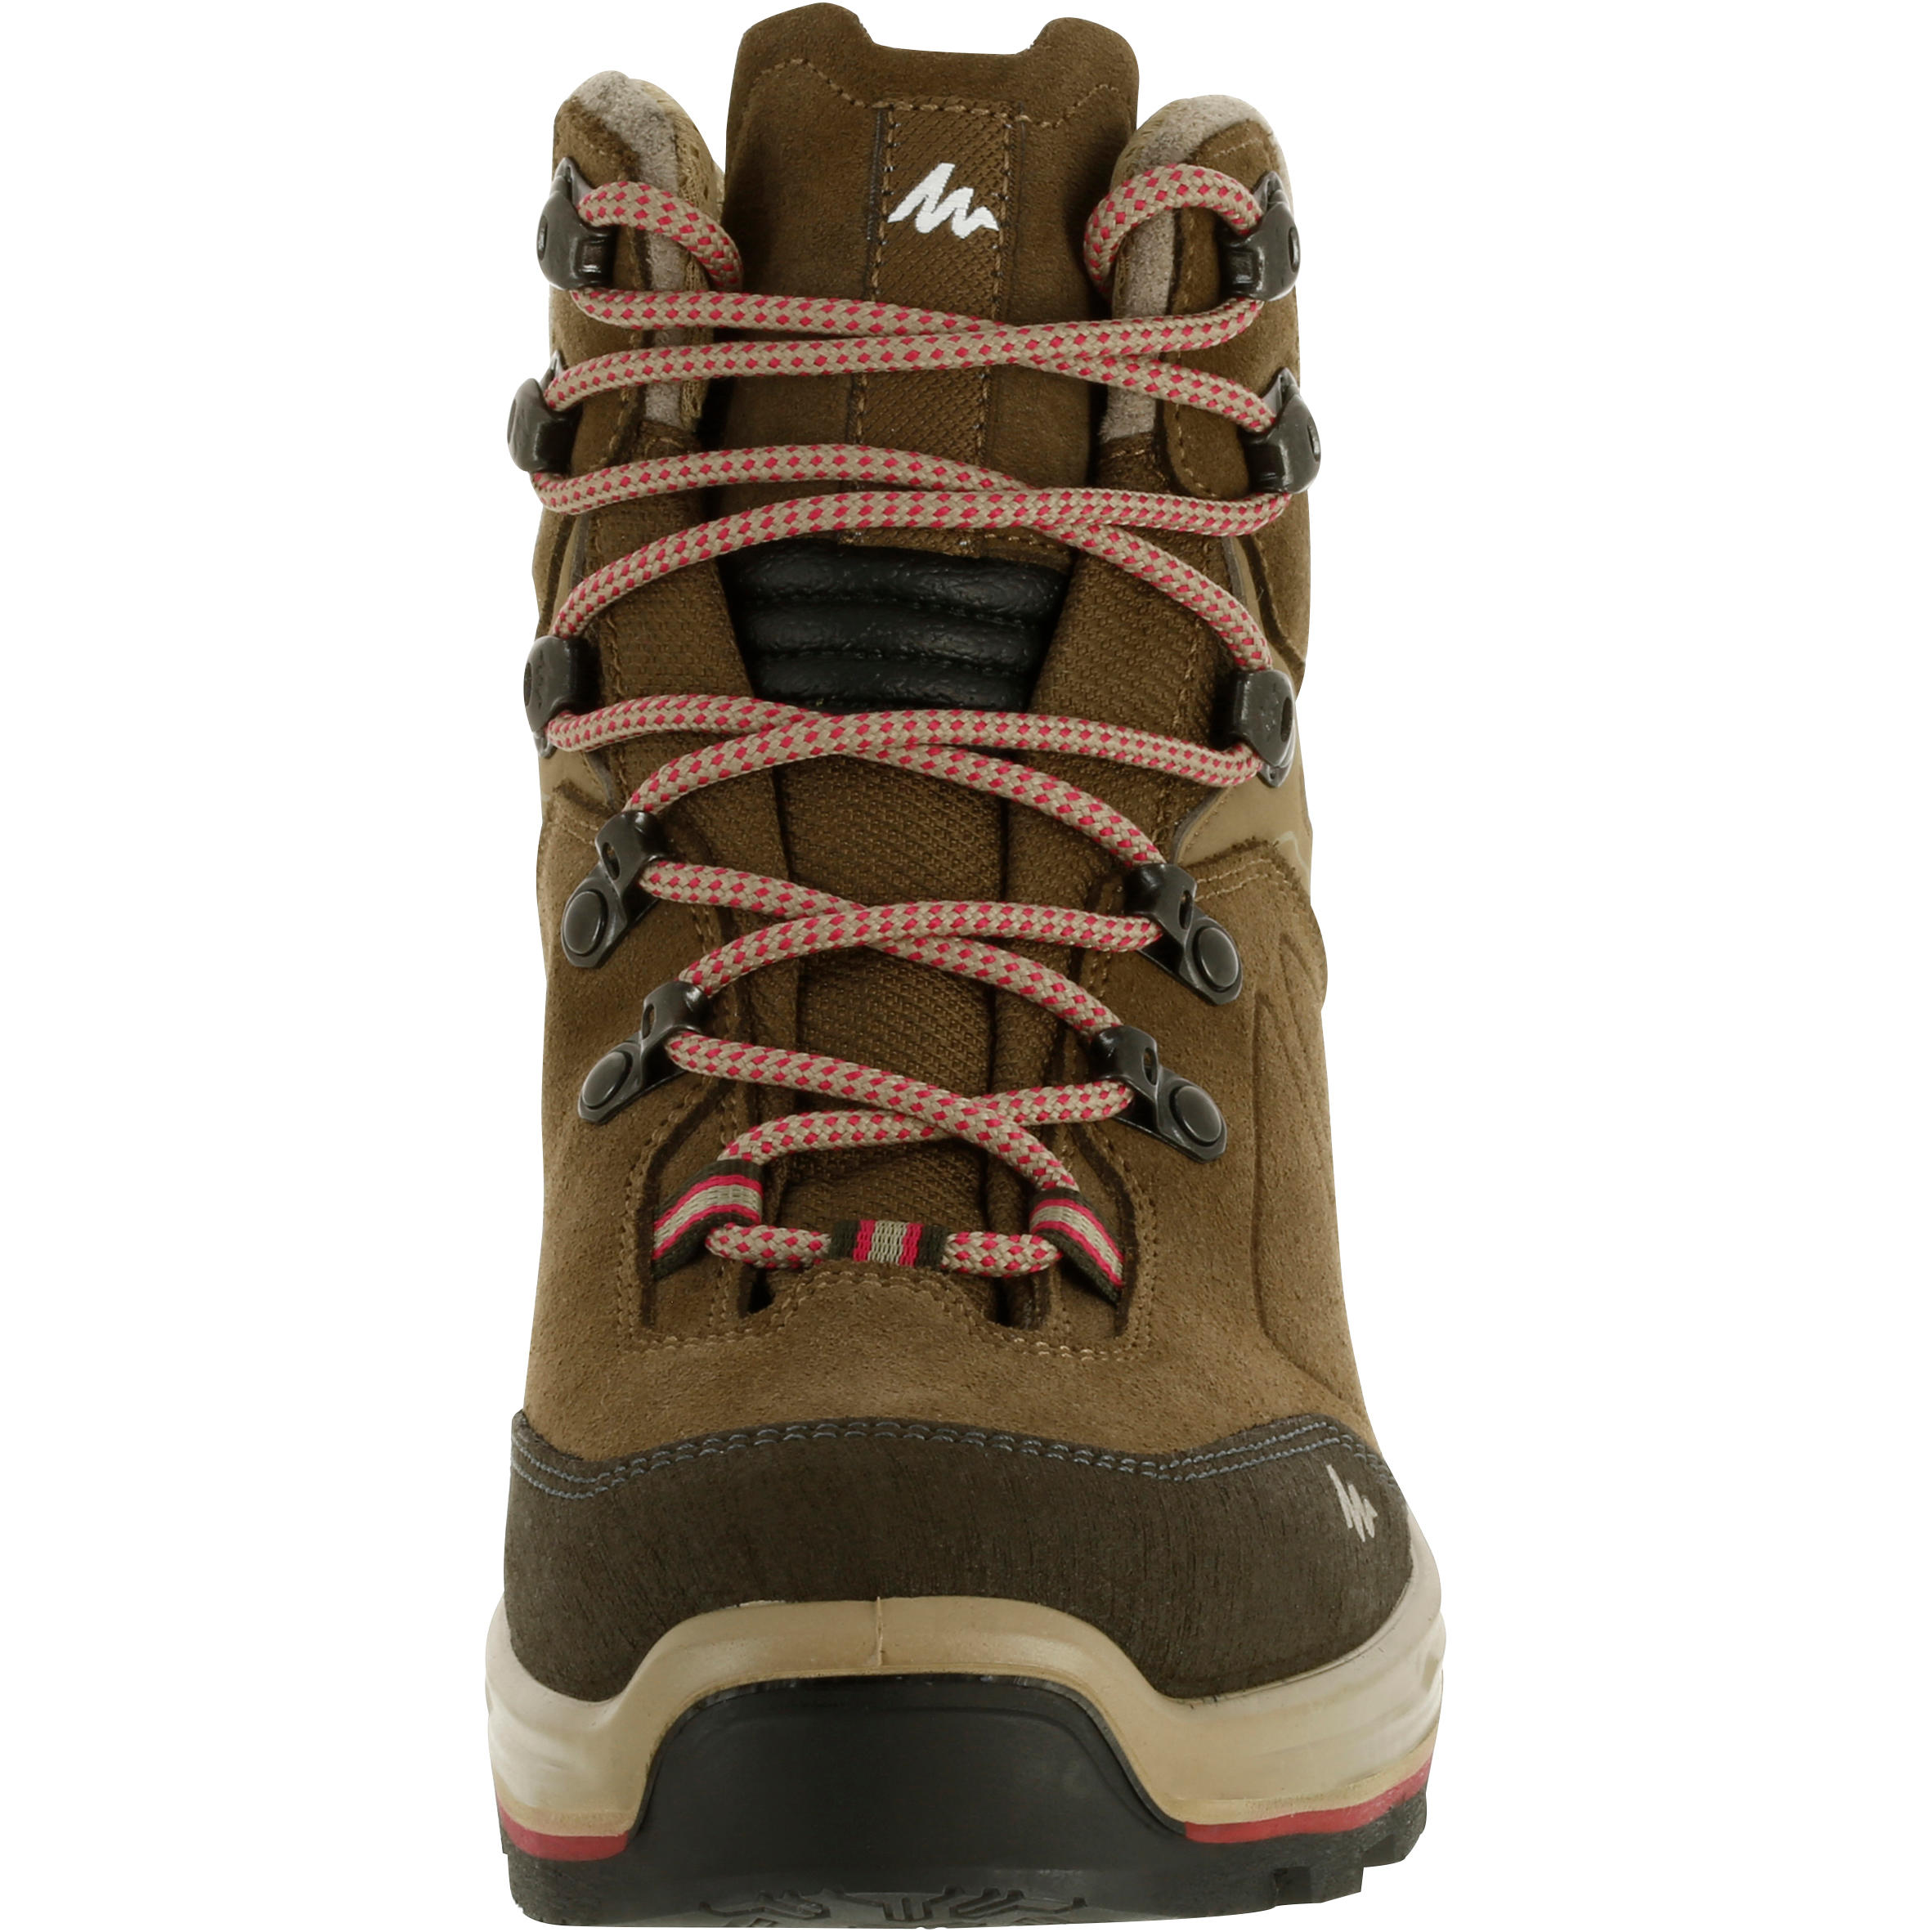 Women’s Leather Hiking Boots - MT 100 Beige - FORCLAZ